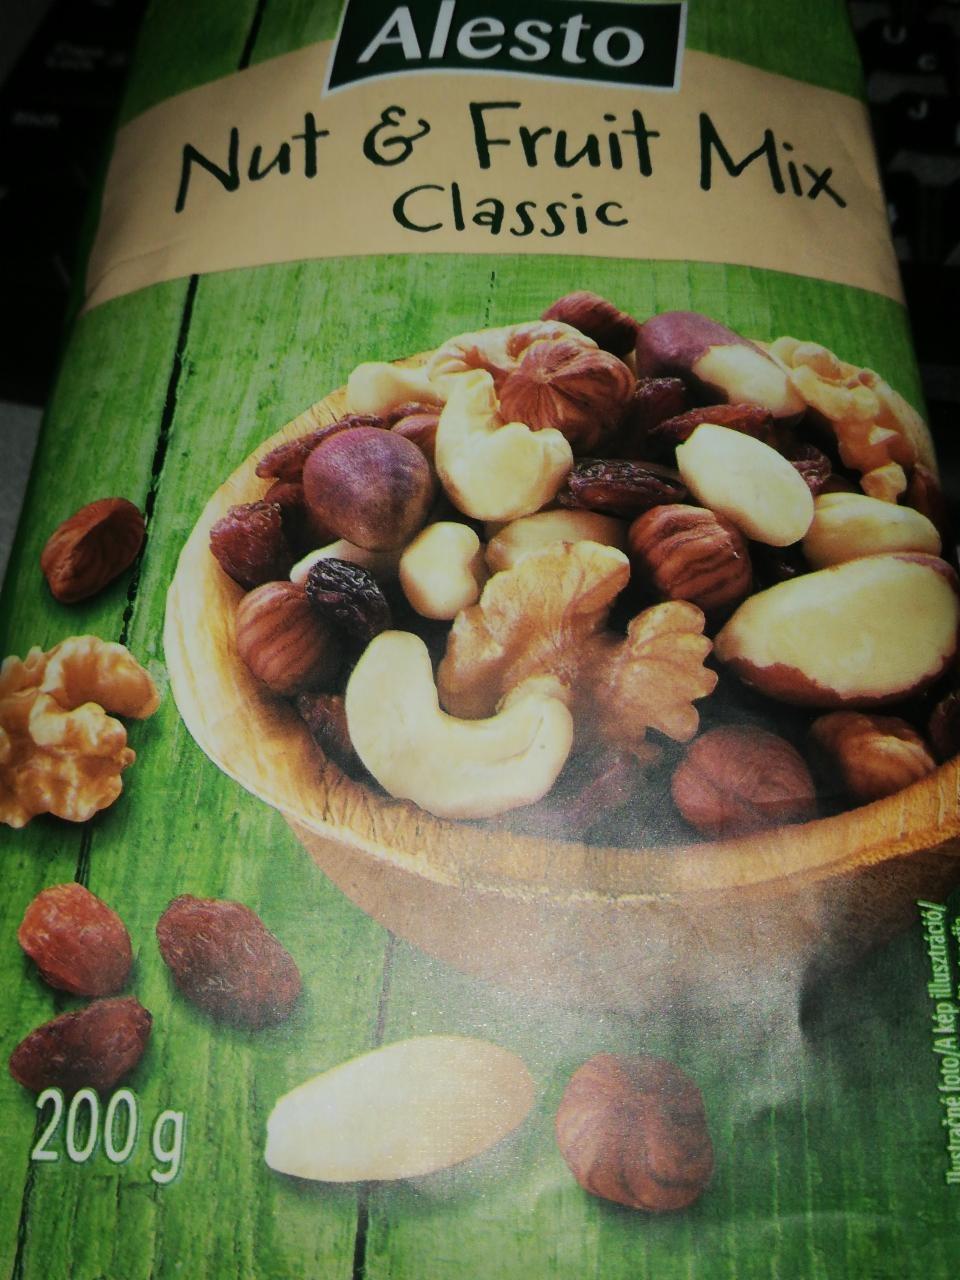 Képek - Nuts & Fruit mix classic Alesto